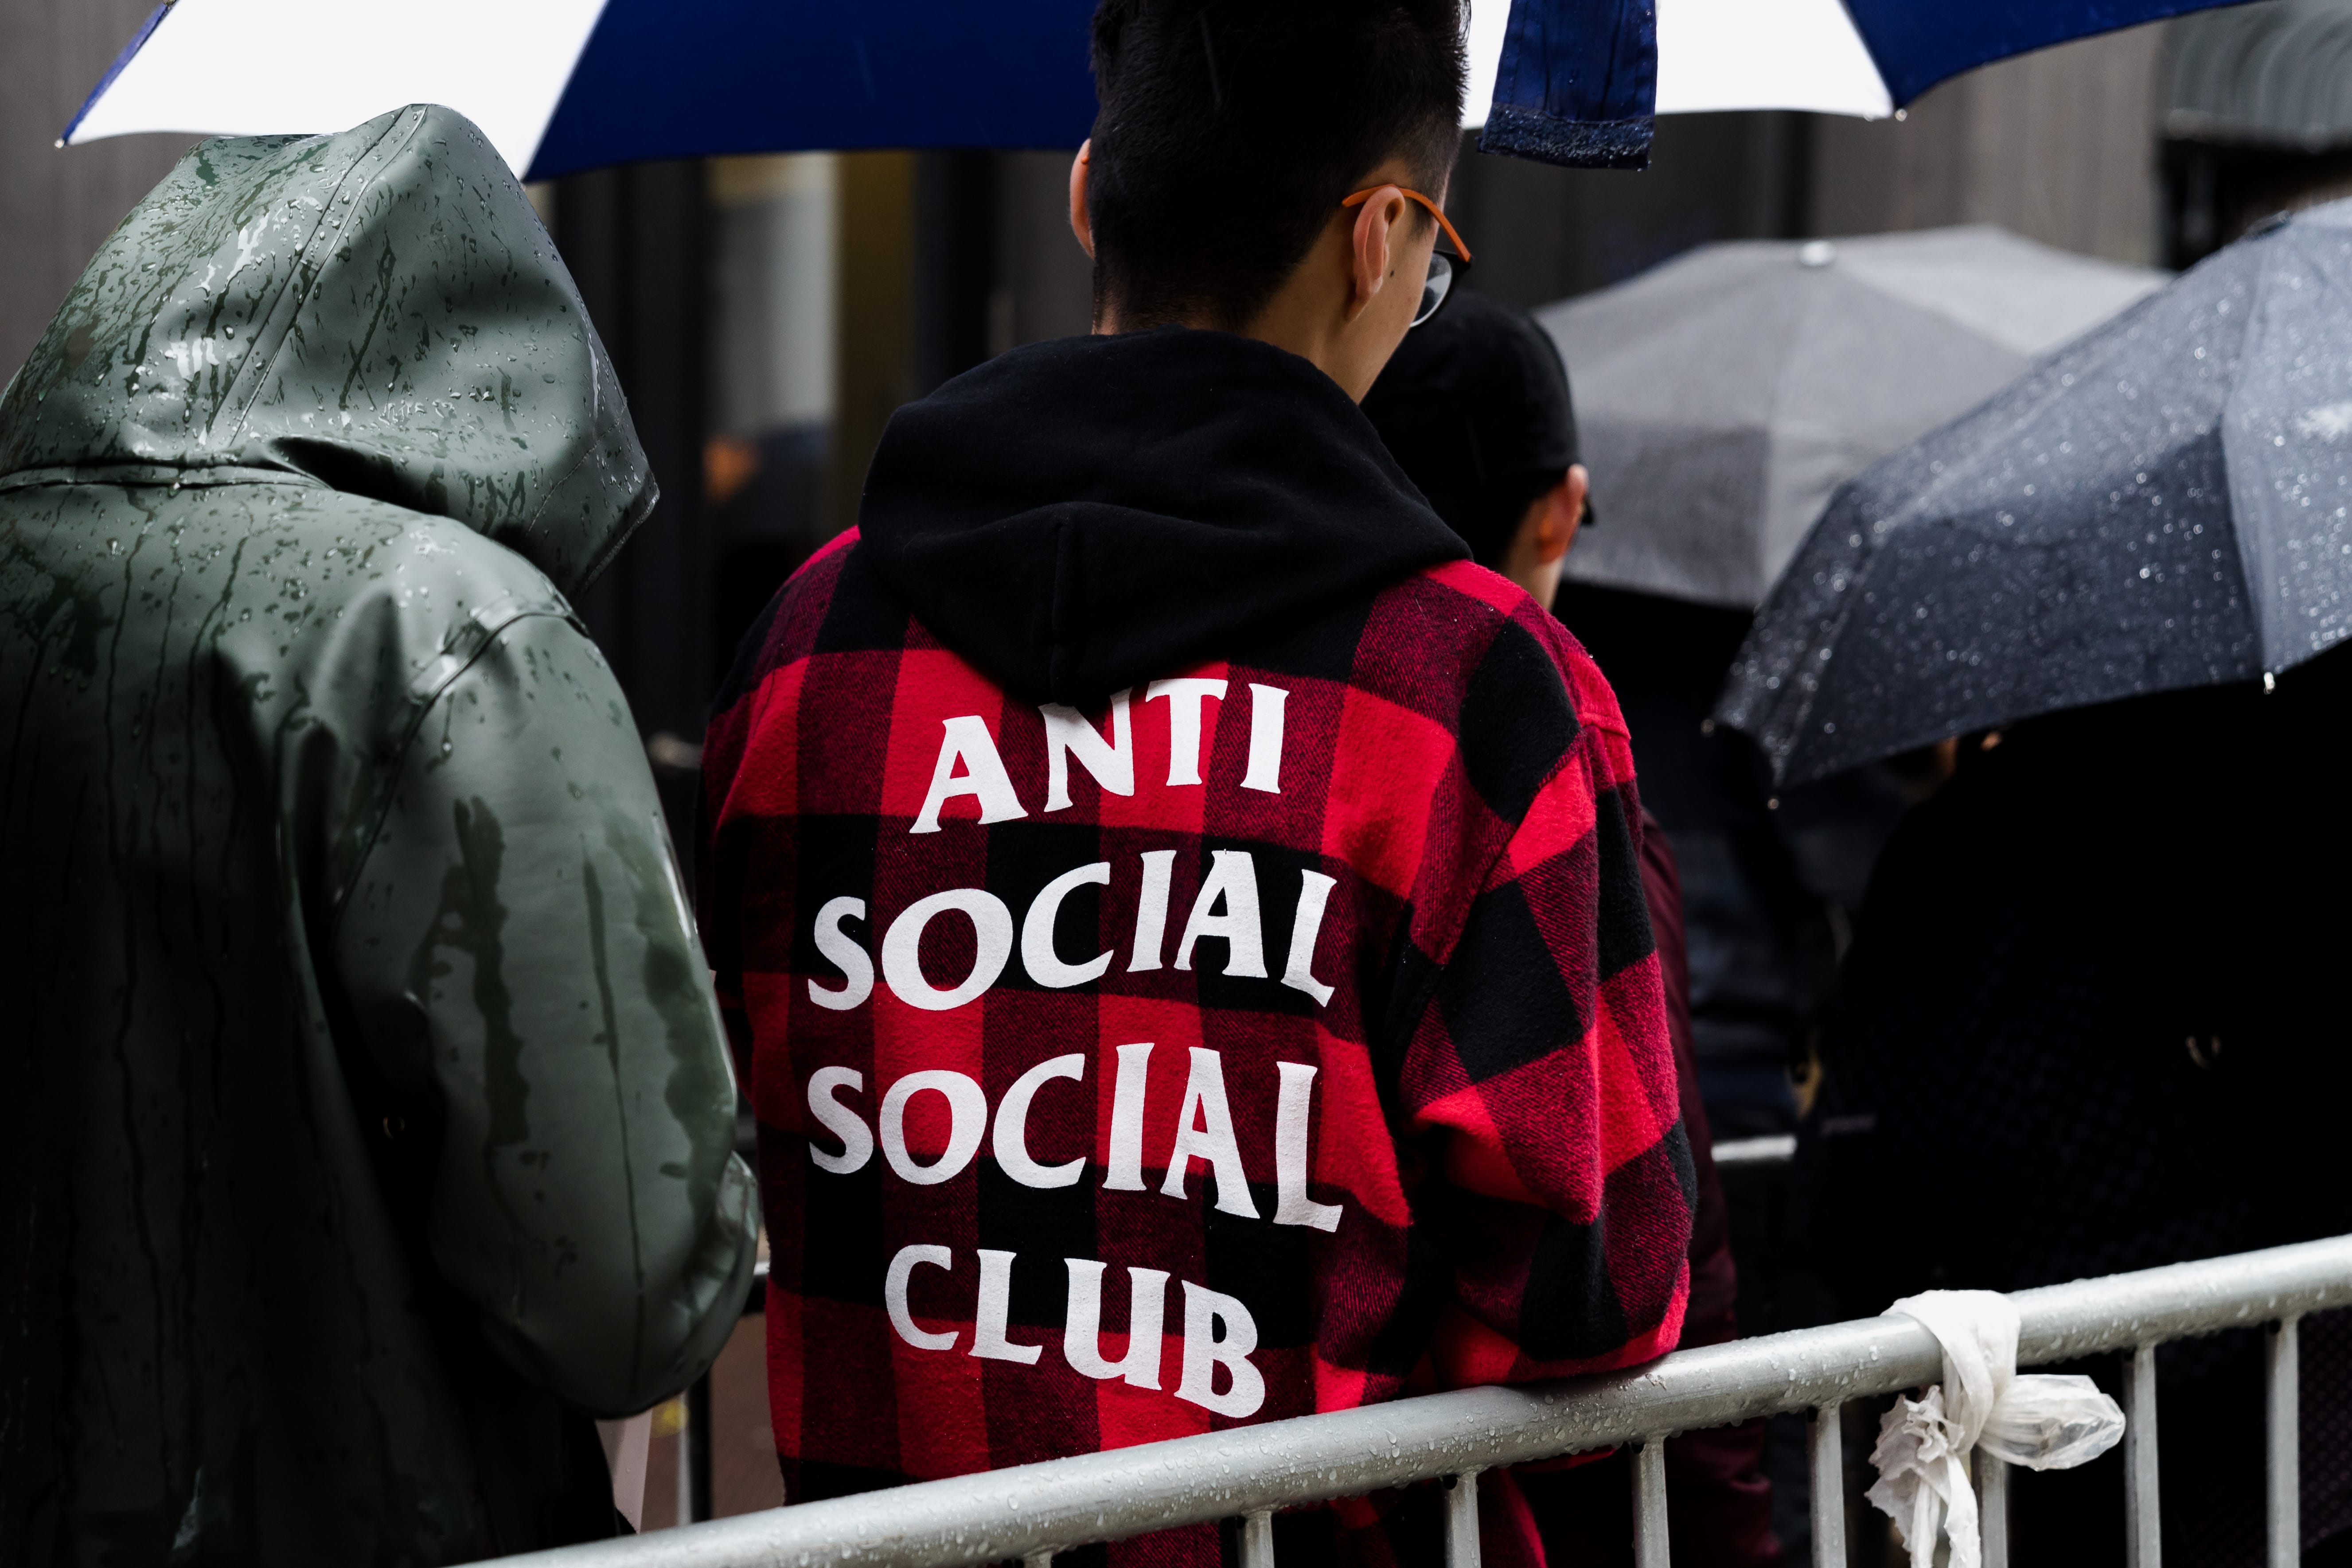 sweater anti social social club original